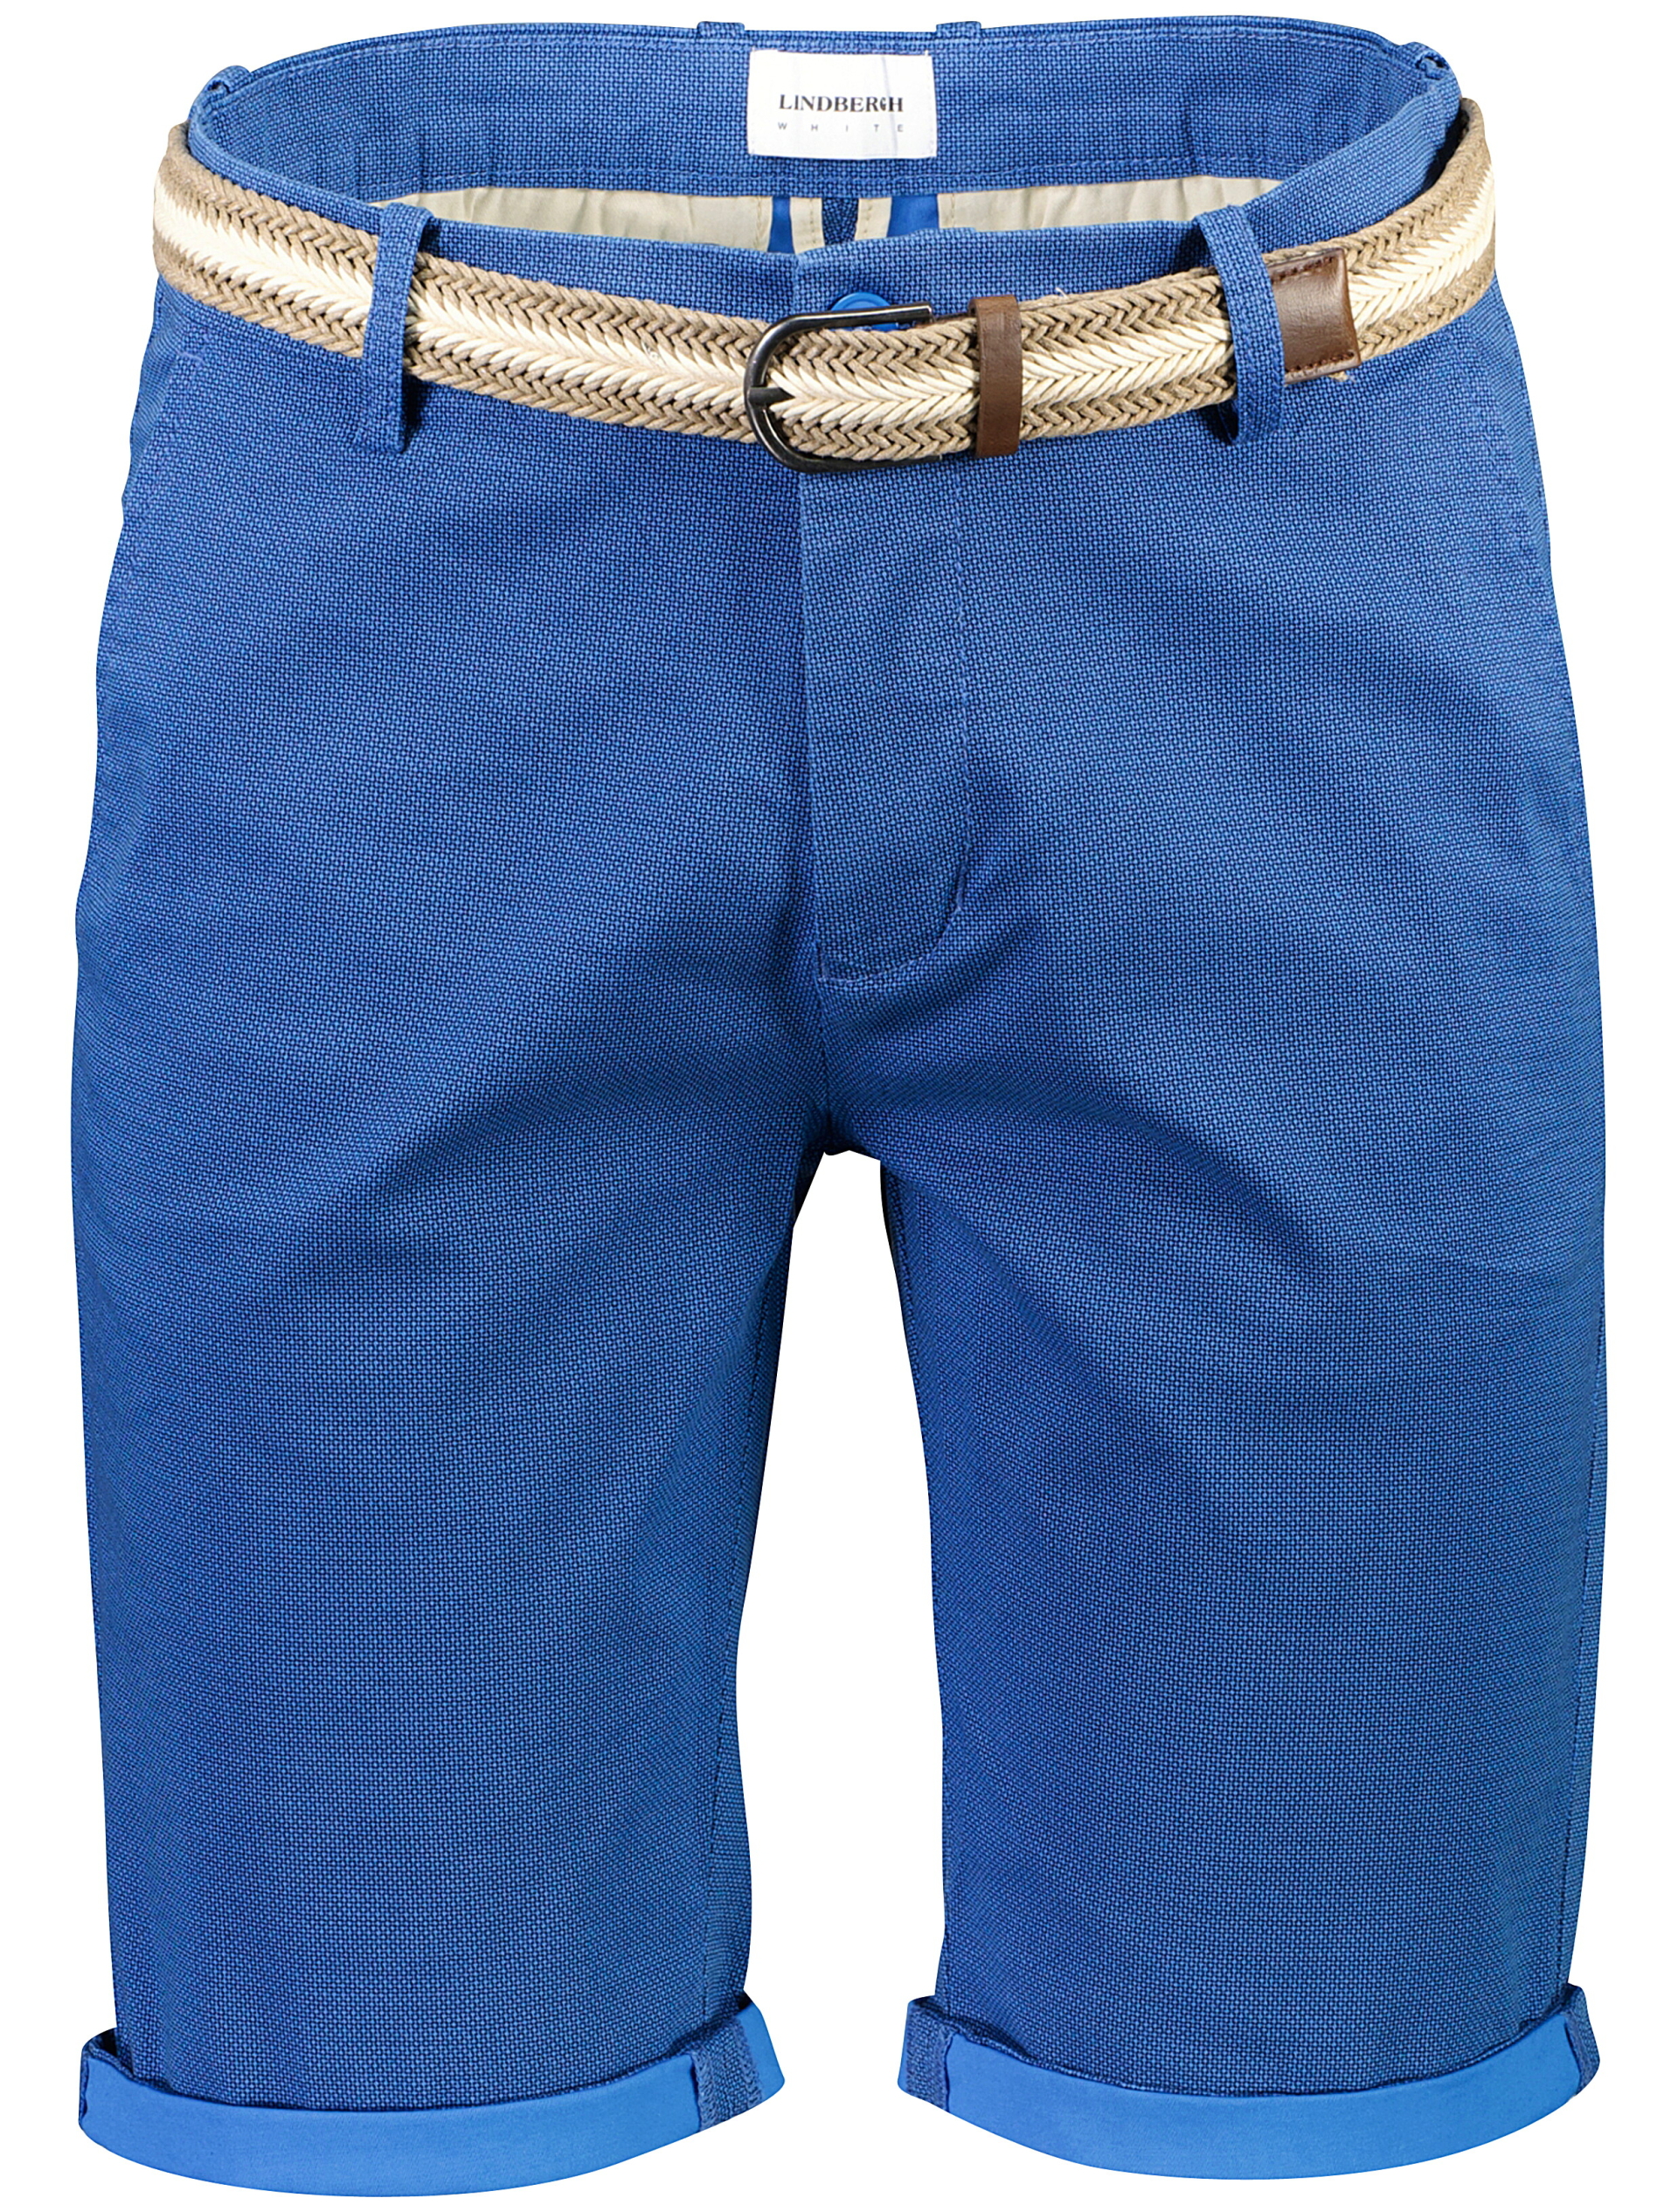 Lindbergh Chino-Shorts blau / true blue